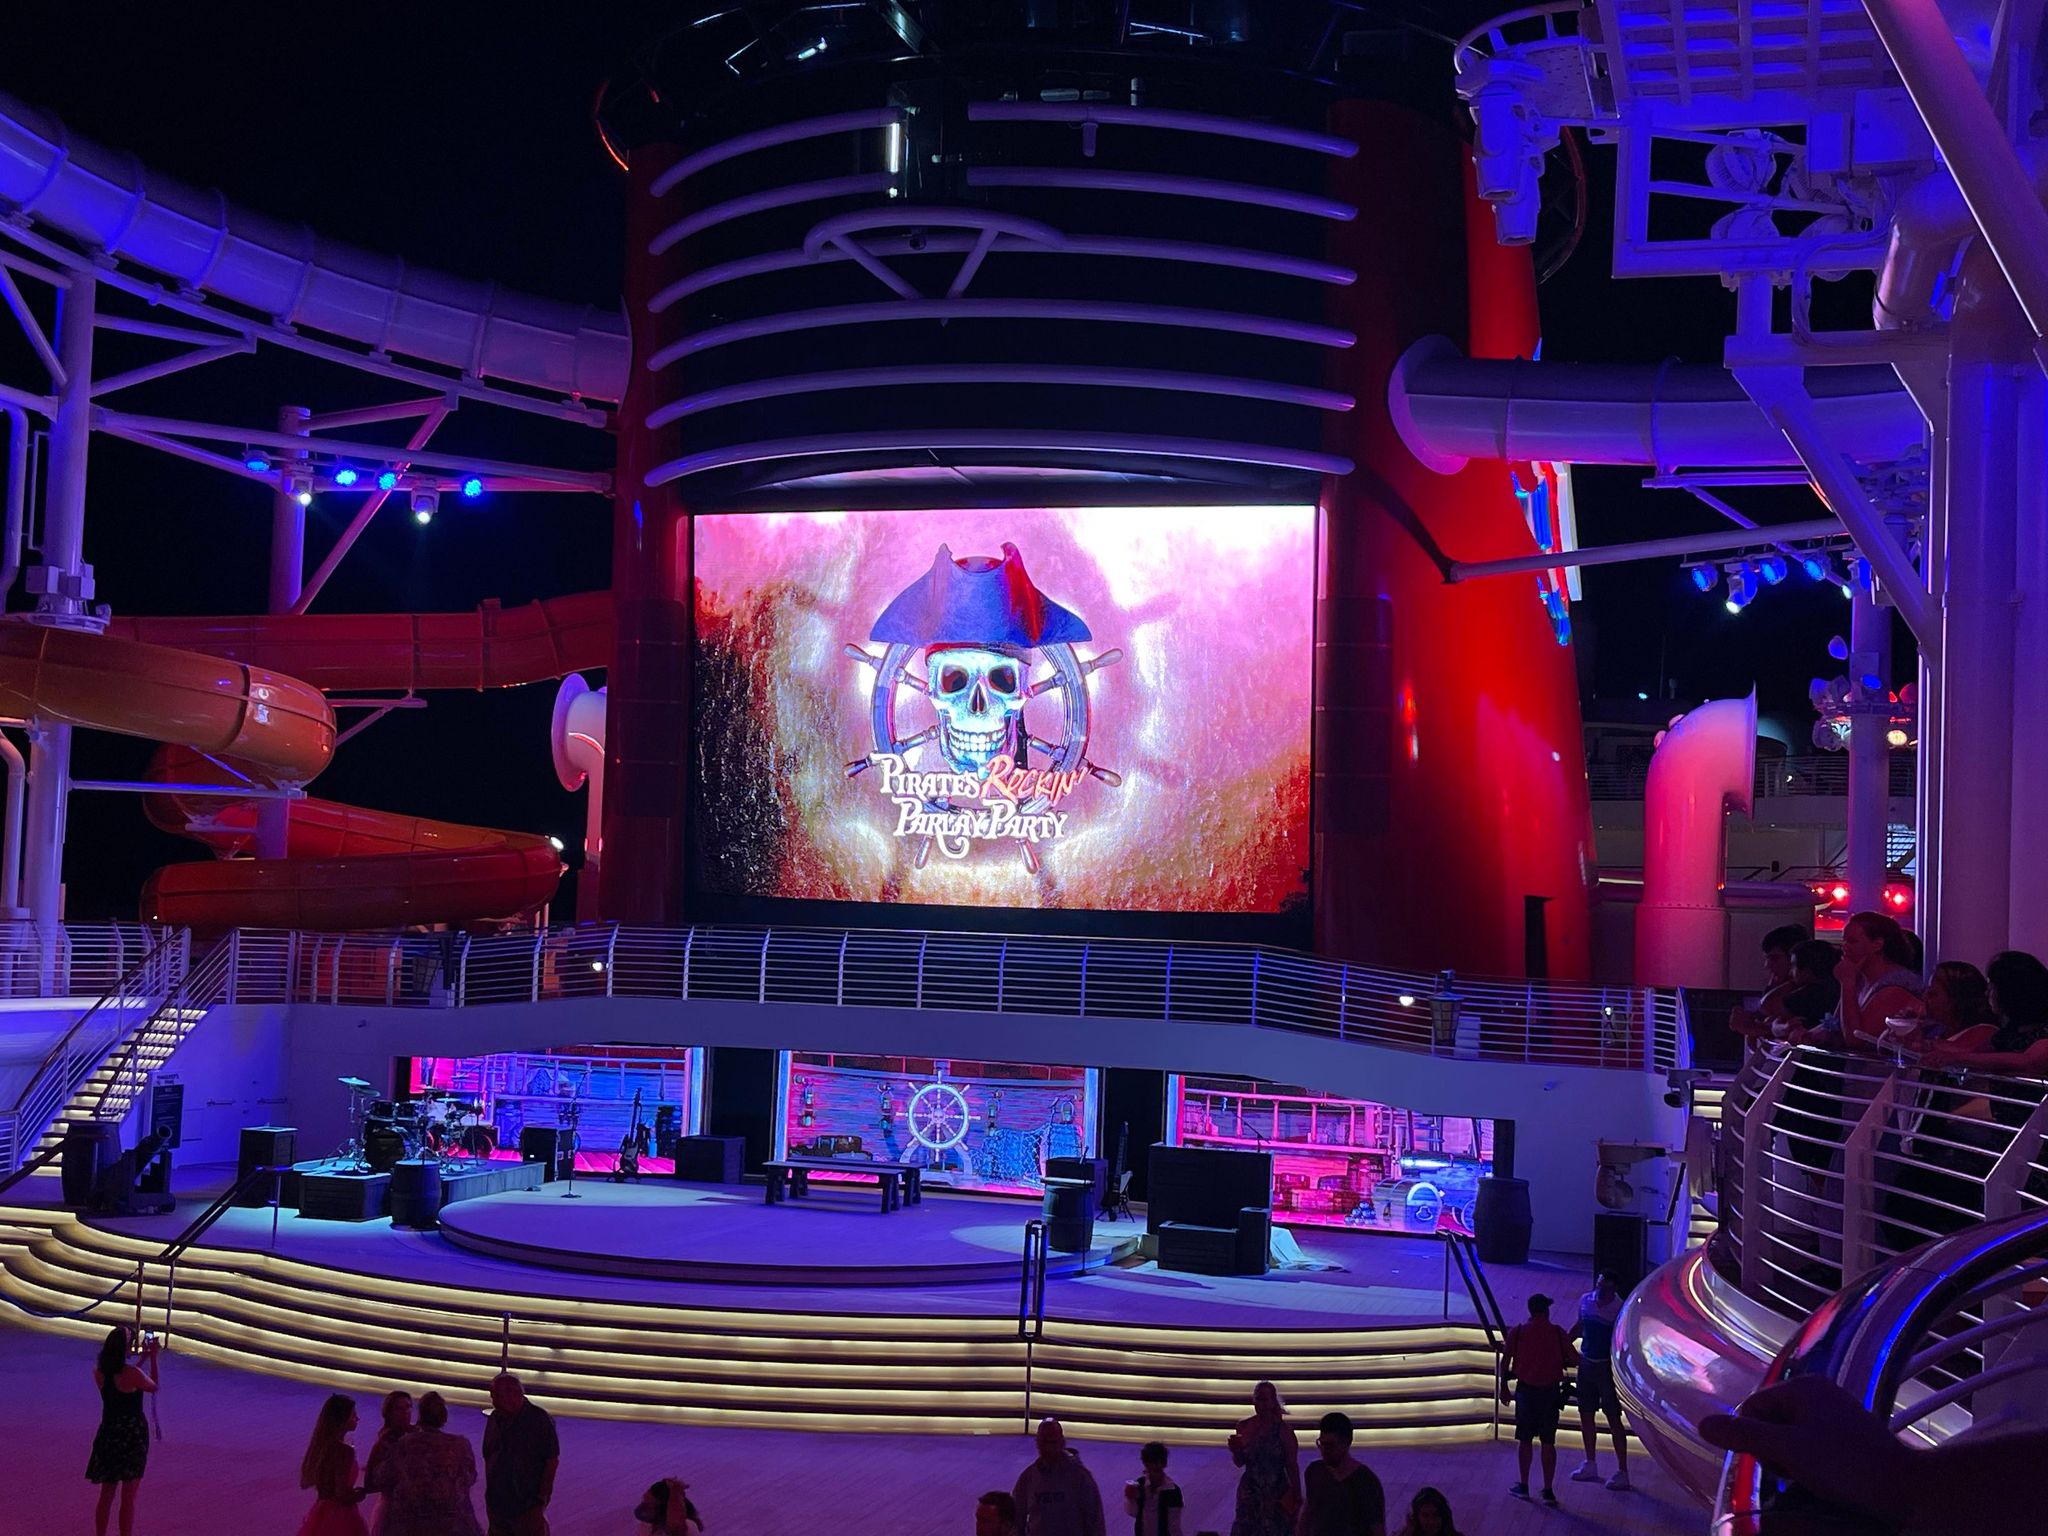 Disney Cruise Pirate Night • Mouse Travel Matters